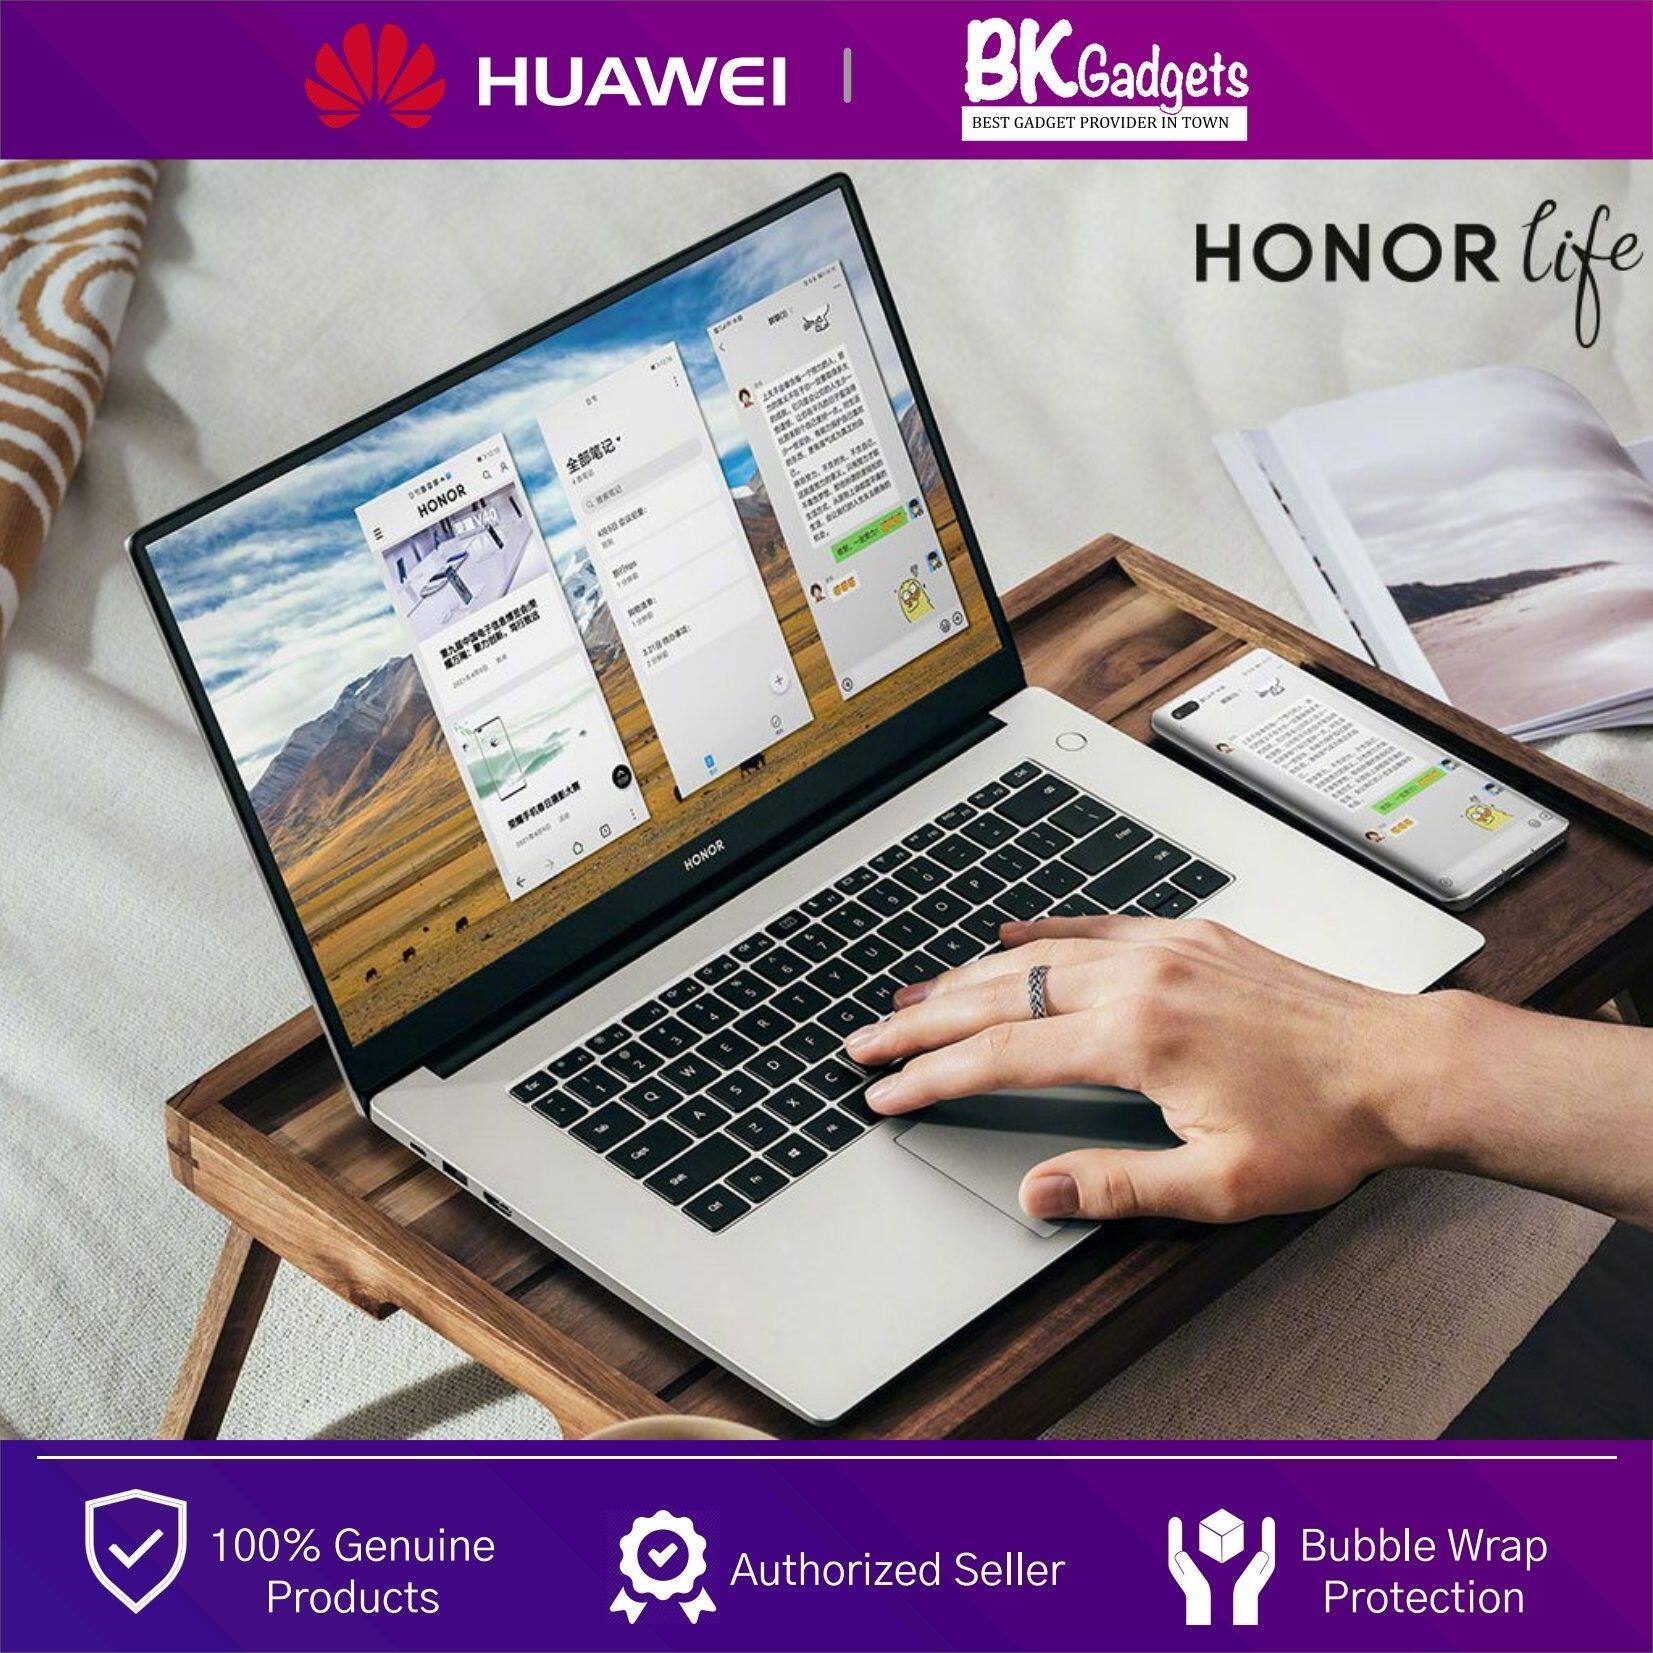 HONOR MagicBook X15 i5 2021 [ 8GB + 512GB + Intel UHD ] Space Grey Laptop | FullView Display | Fingerprint Power Button | 65W Fast Charging | Aluminum Metal Body